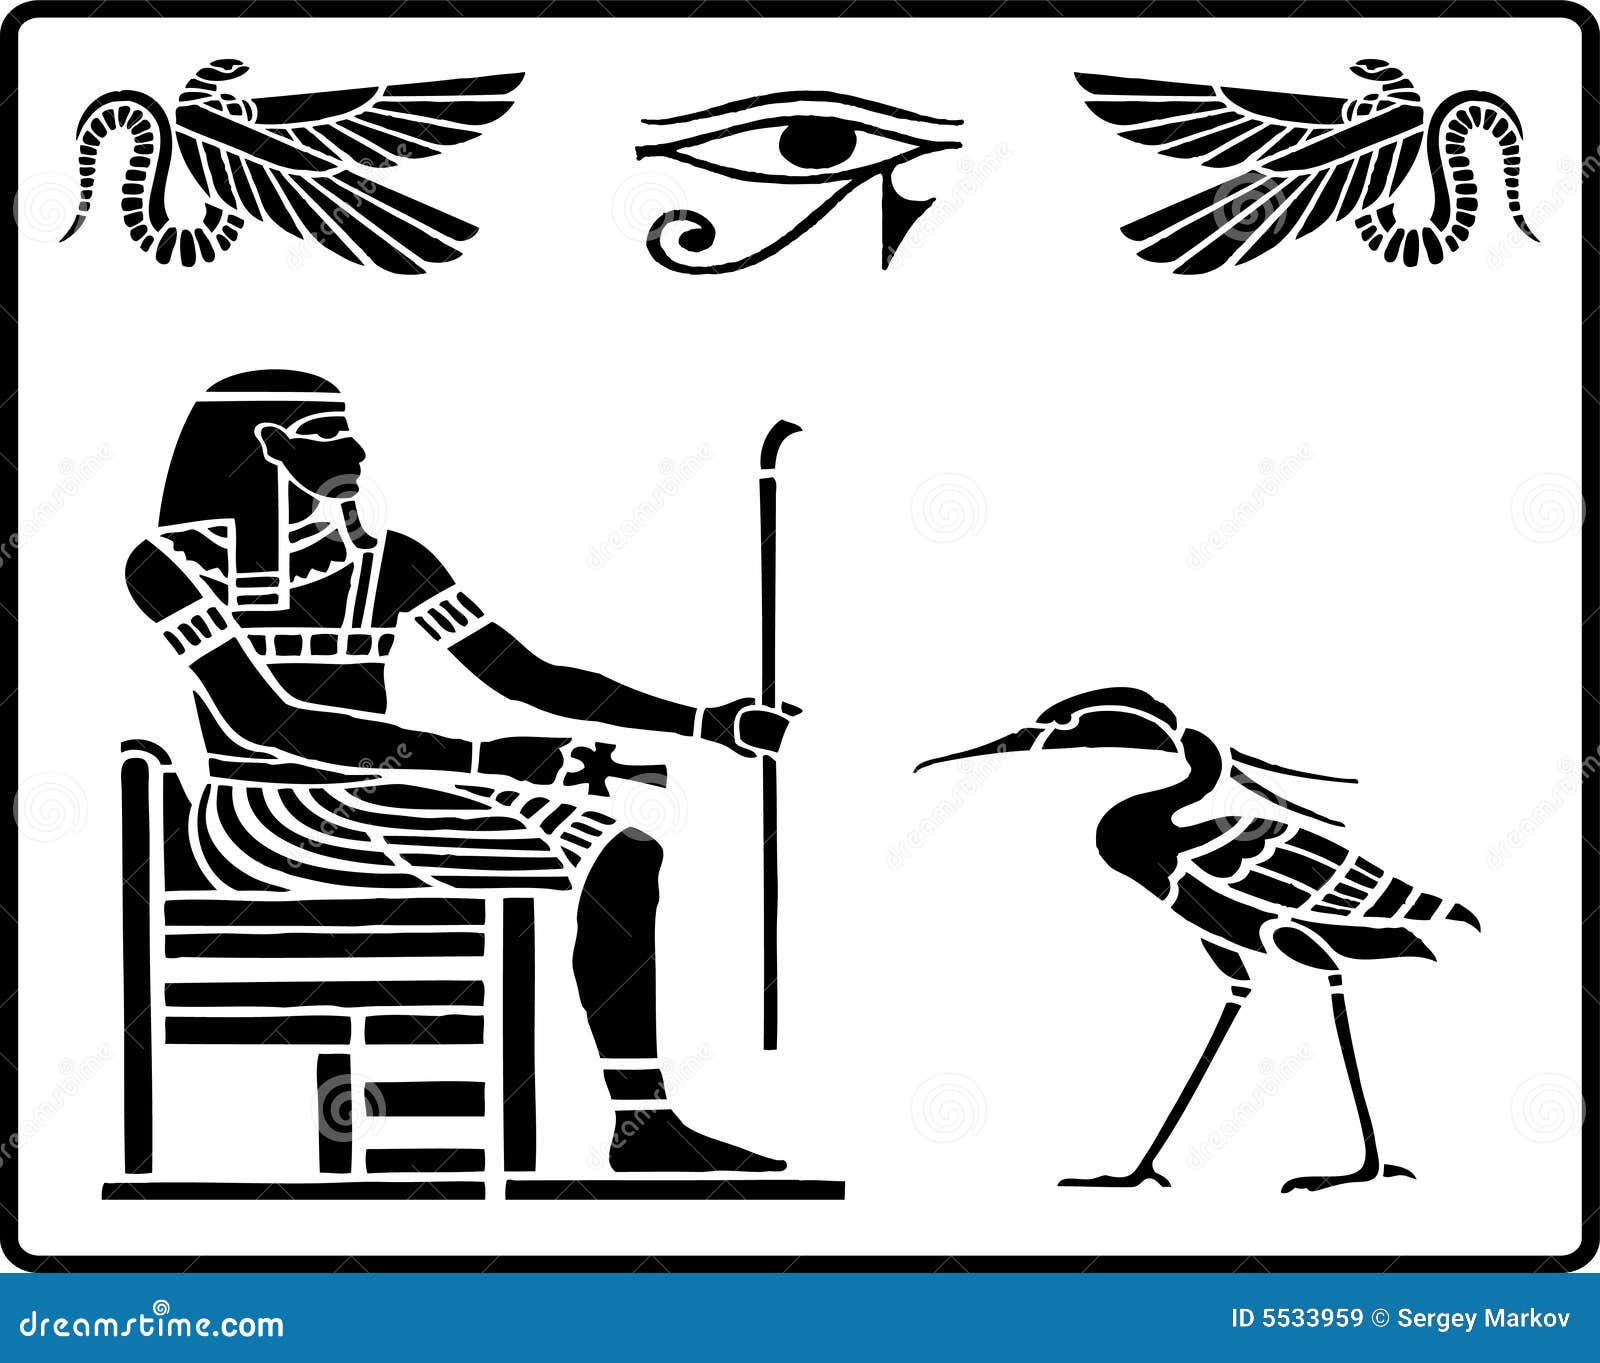 egyptian hieroglyphics - 1